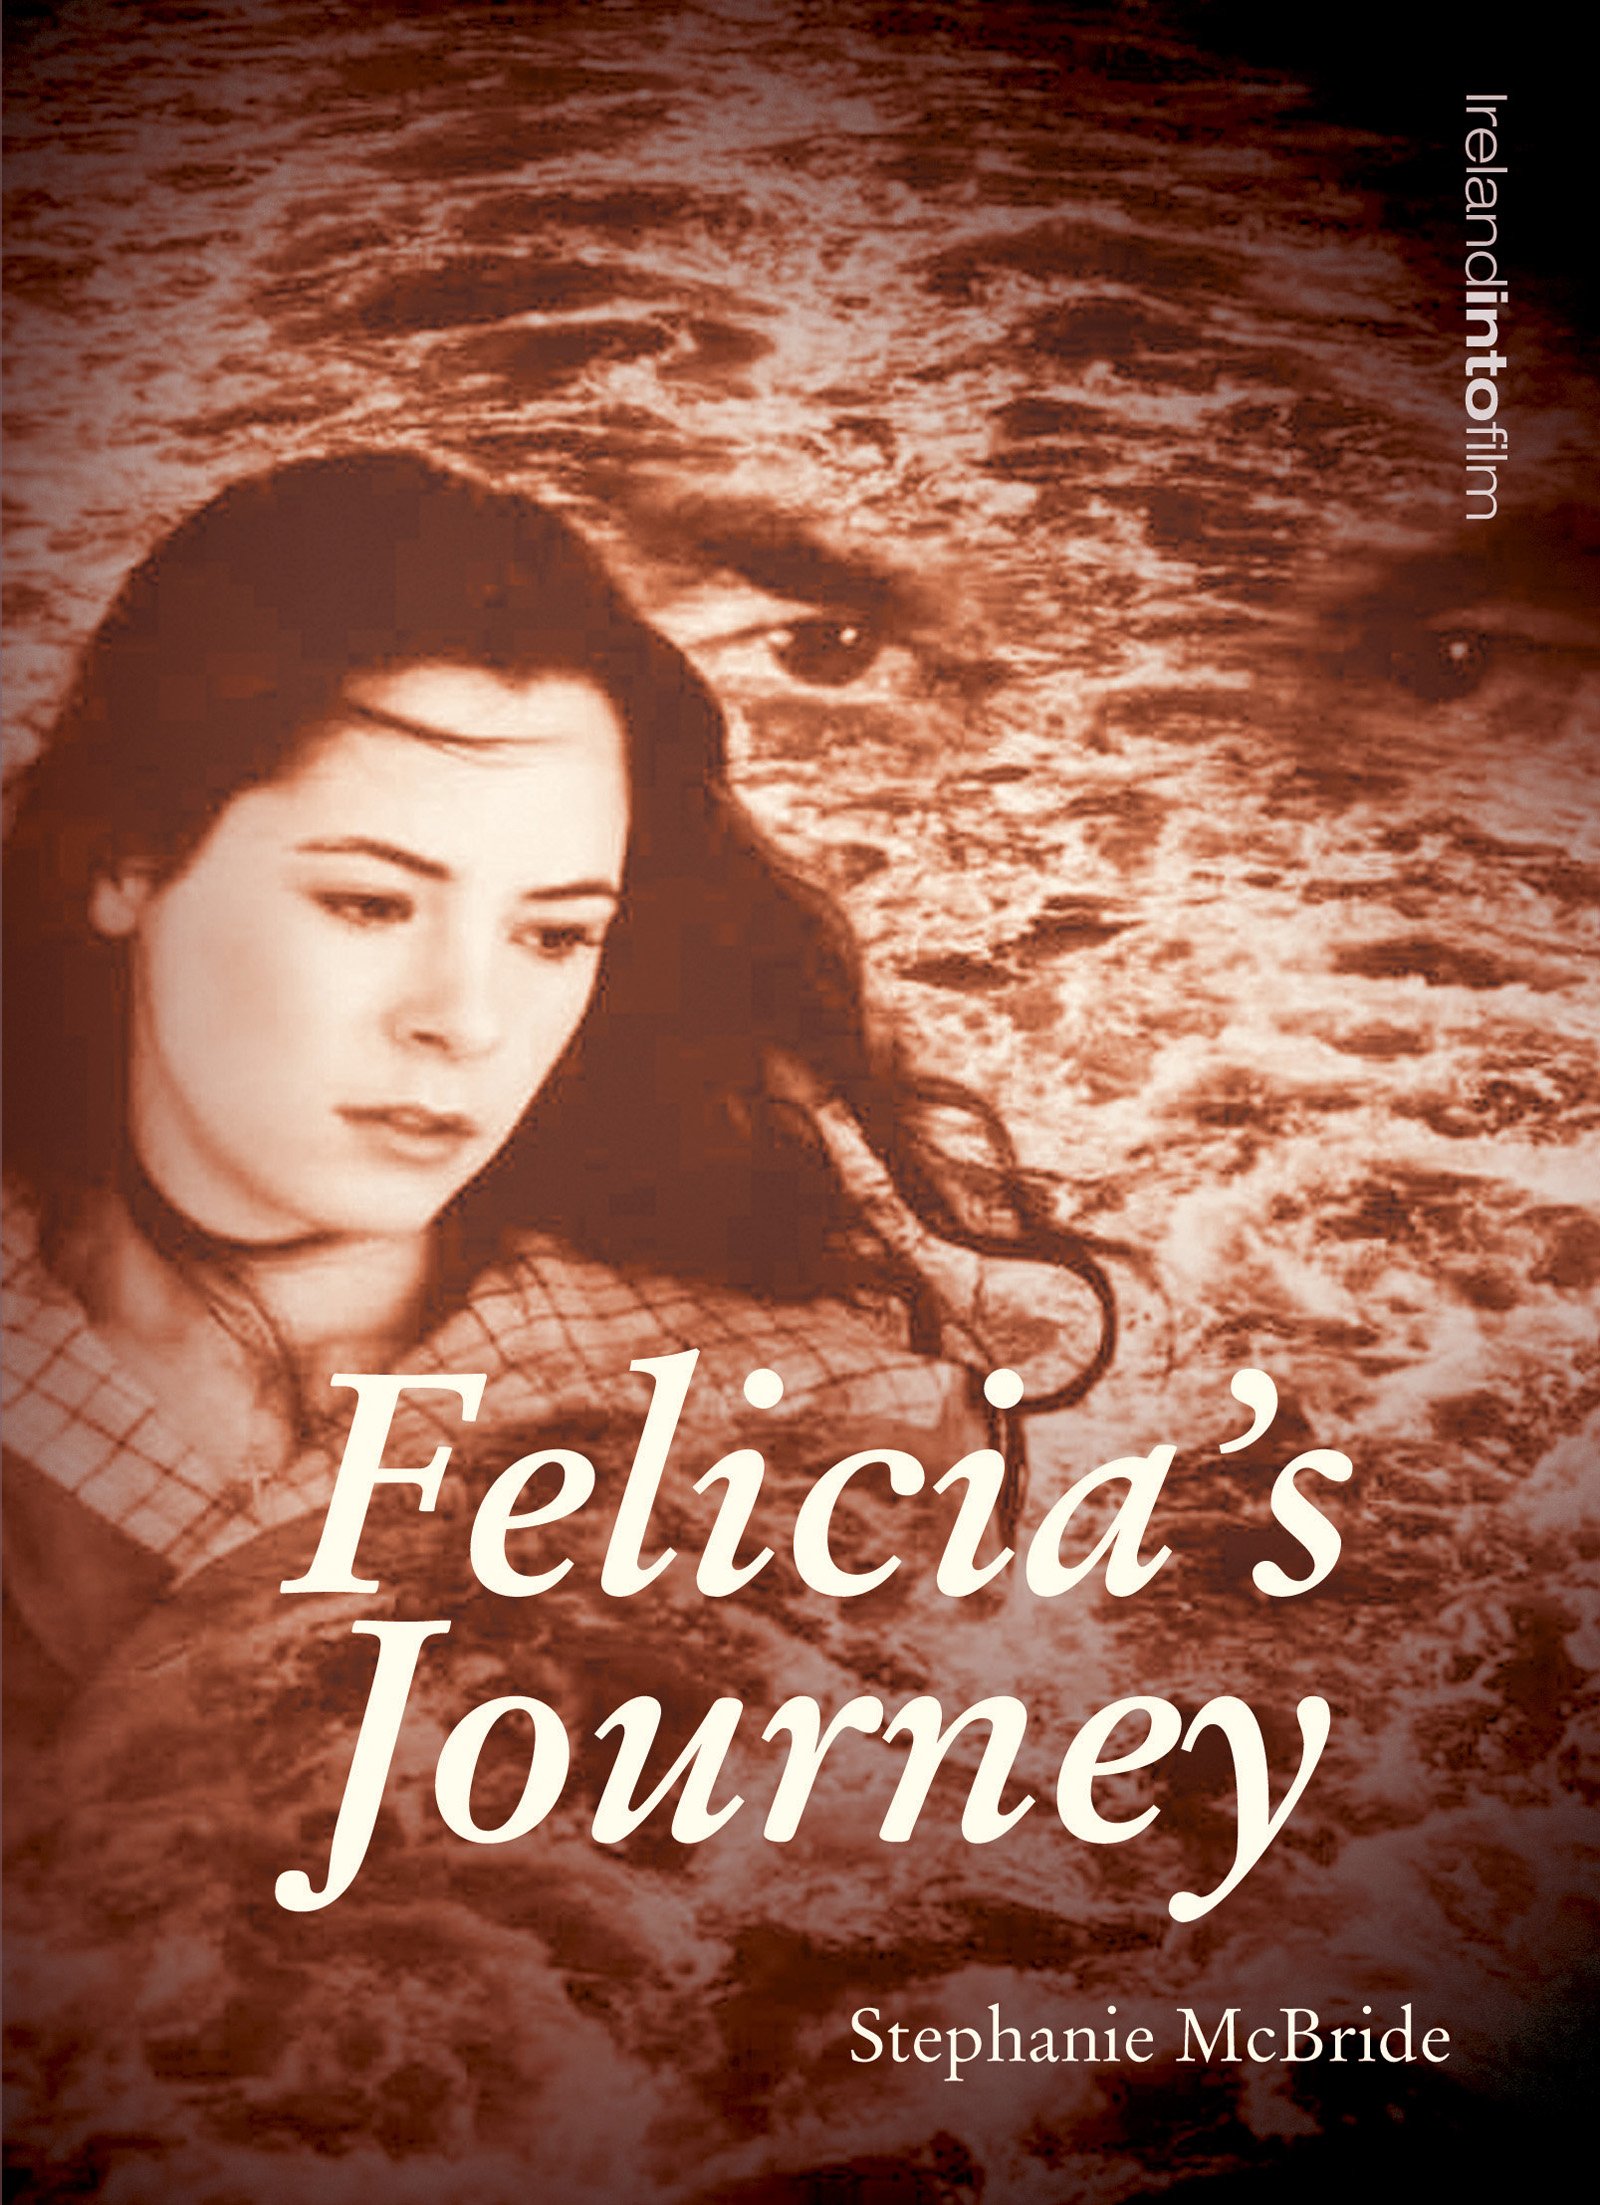 Felicia's Journey (1999) Main Poster